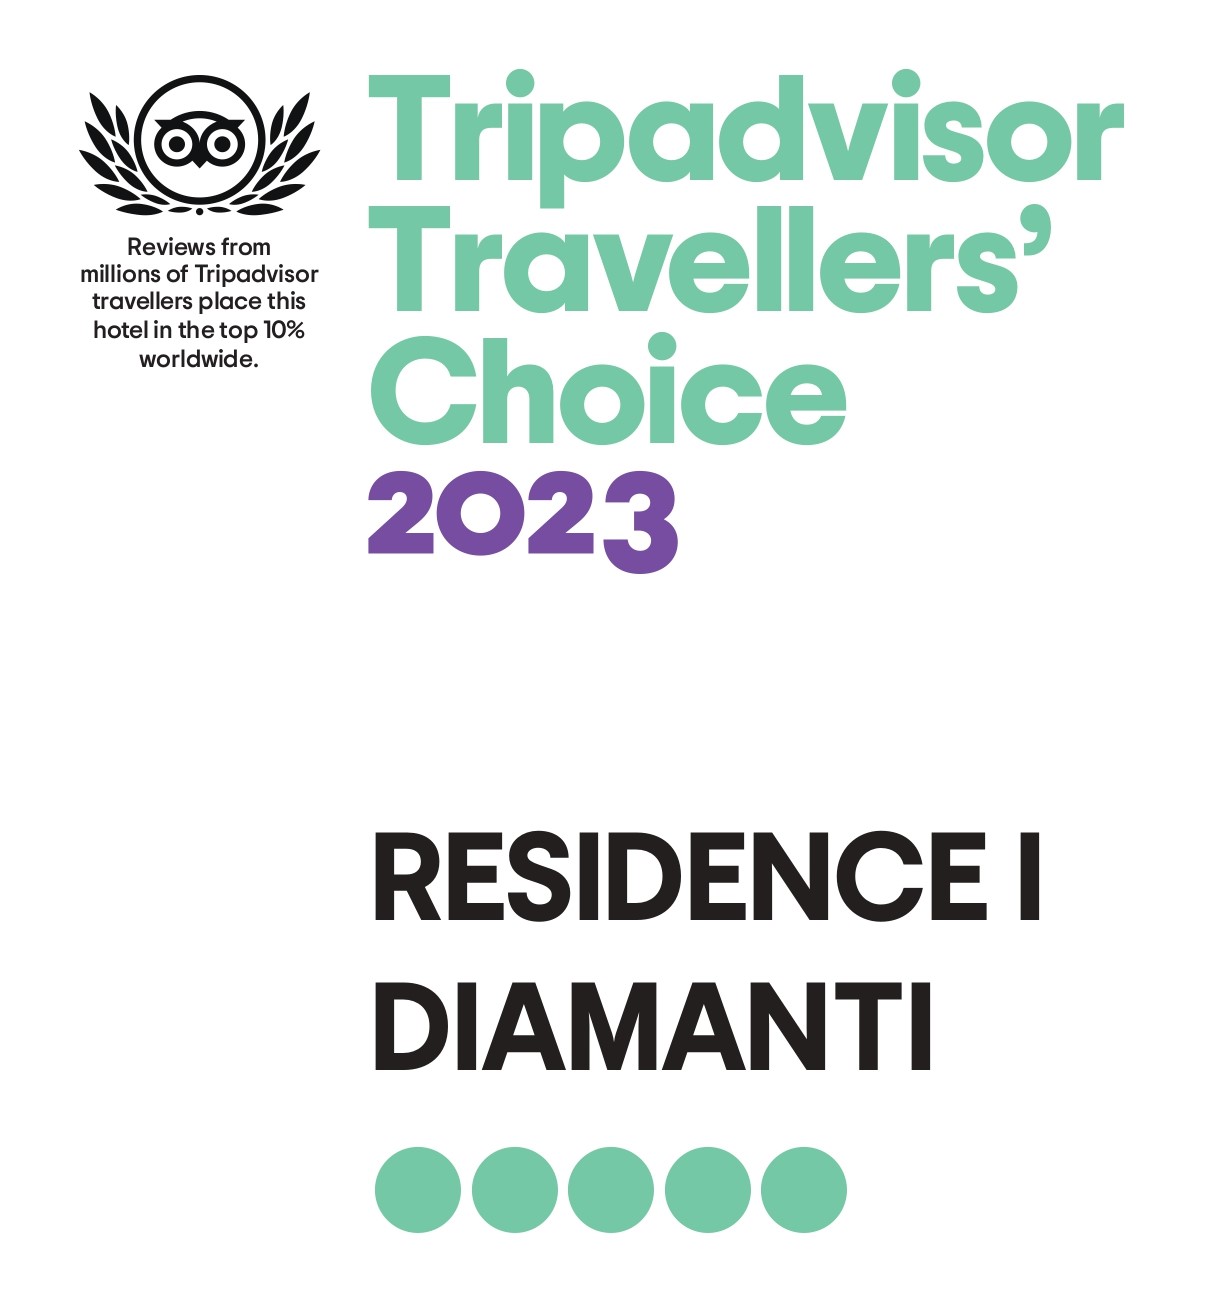 Award tripadvisor 2023 residence i diamanti